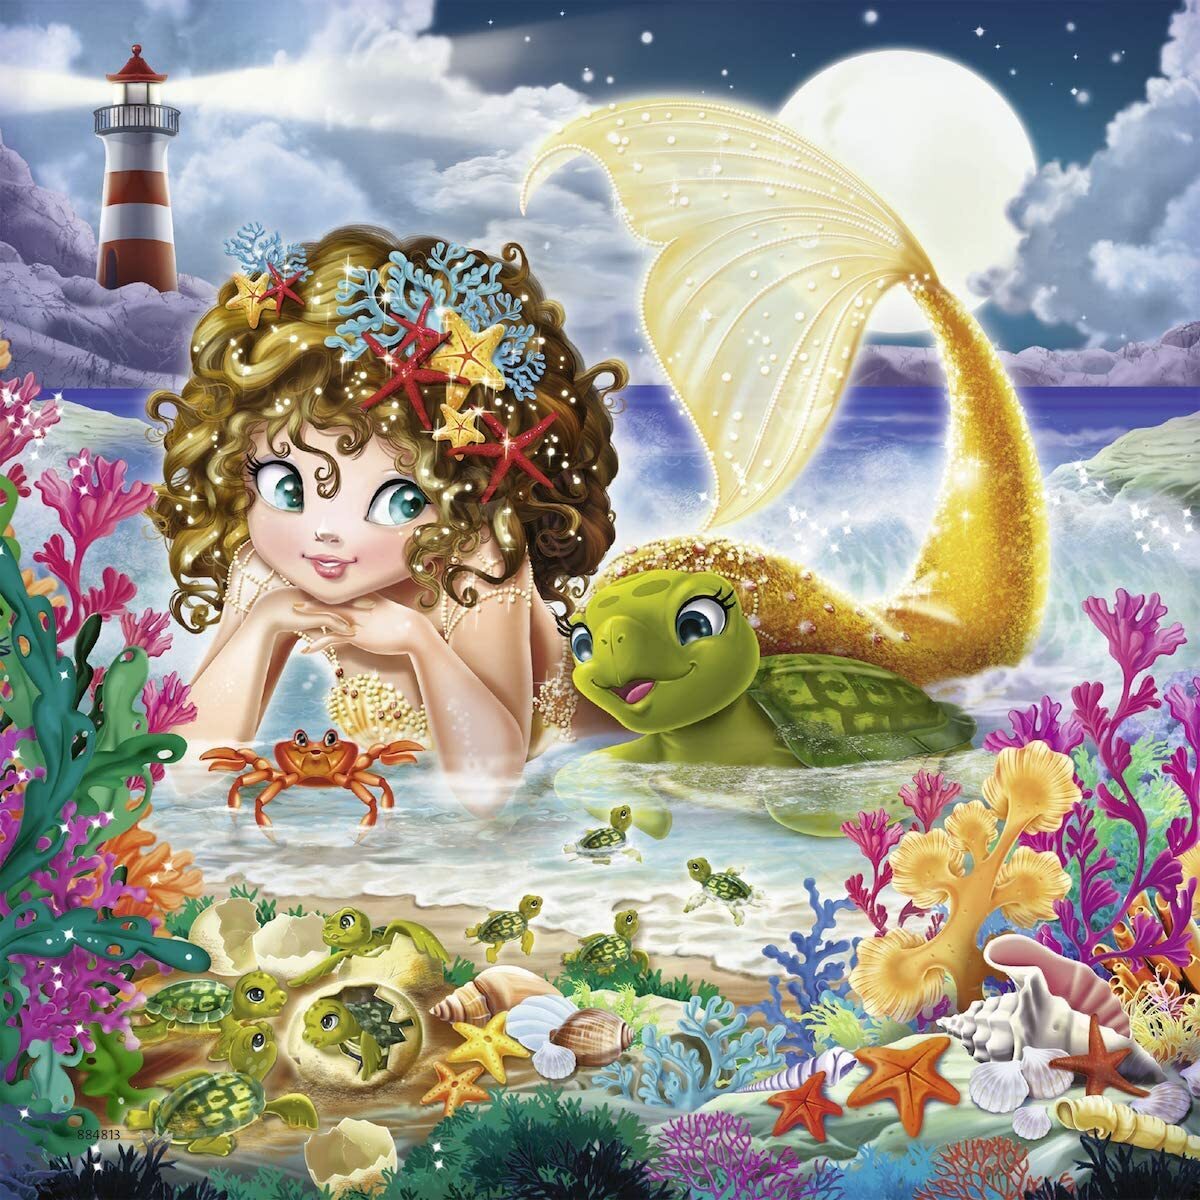 Charming Mermaids